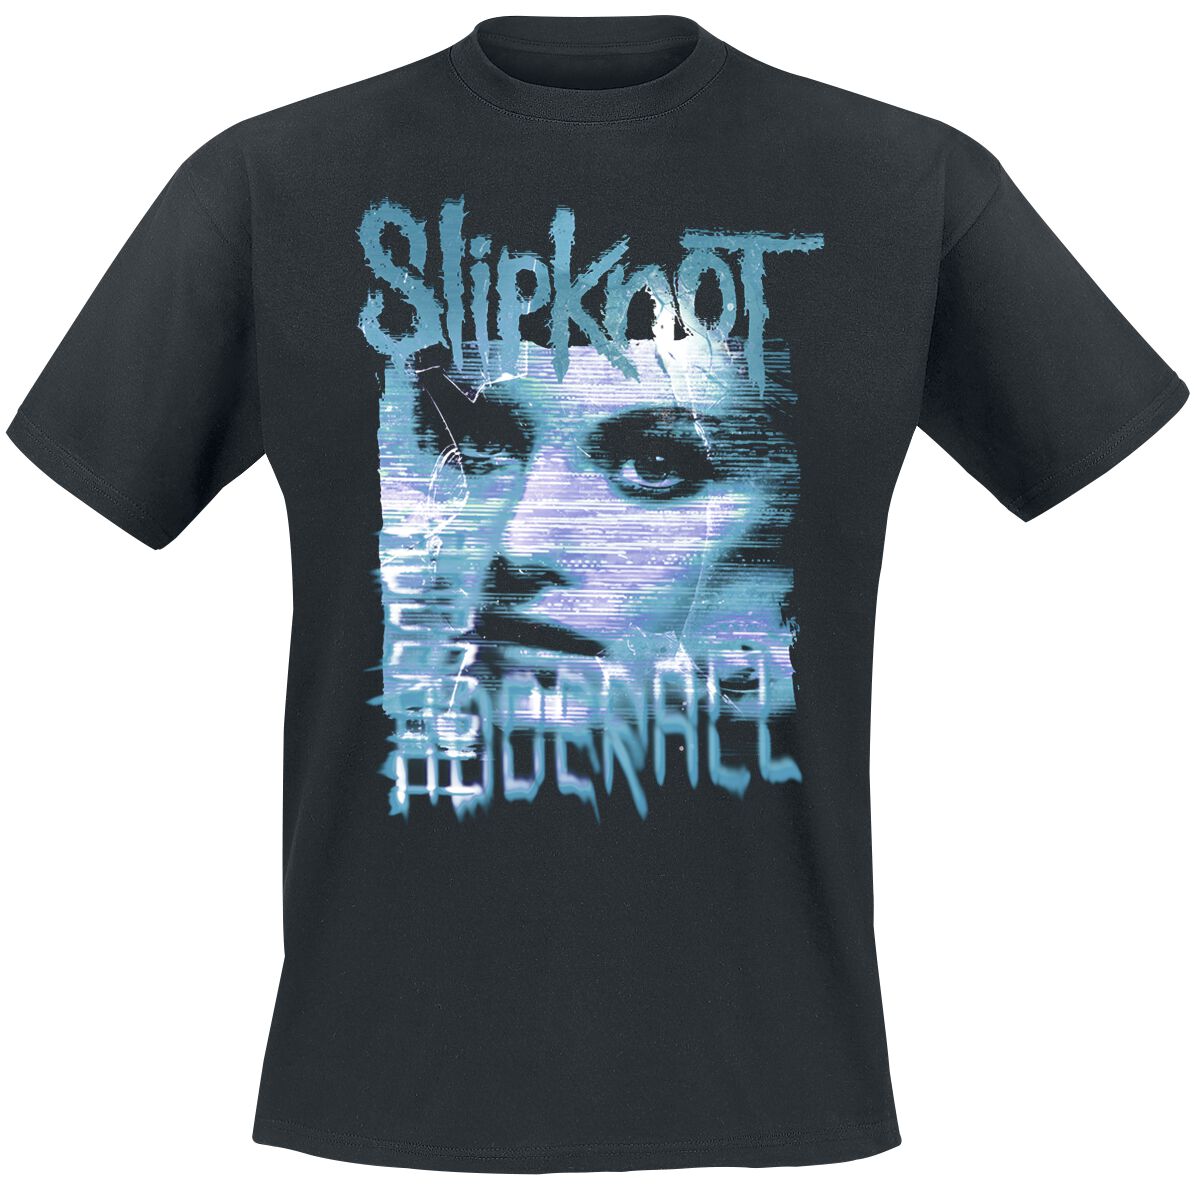 Slipknot Adderall Listener T-Shirt schwarz in XL